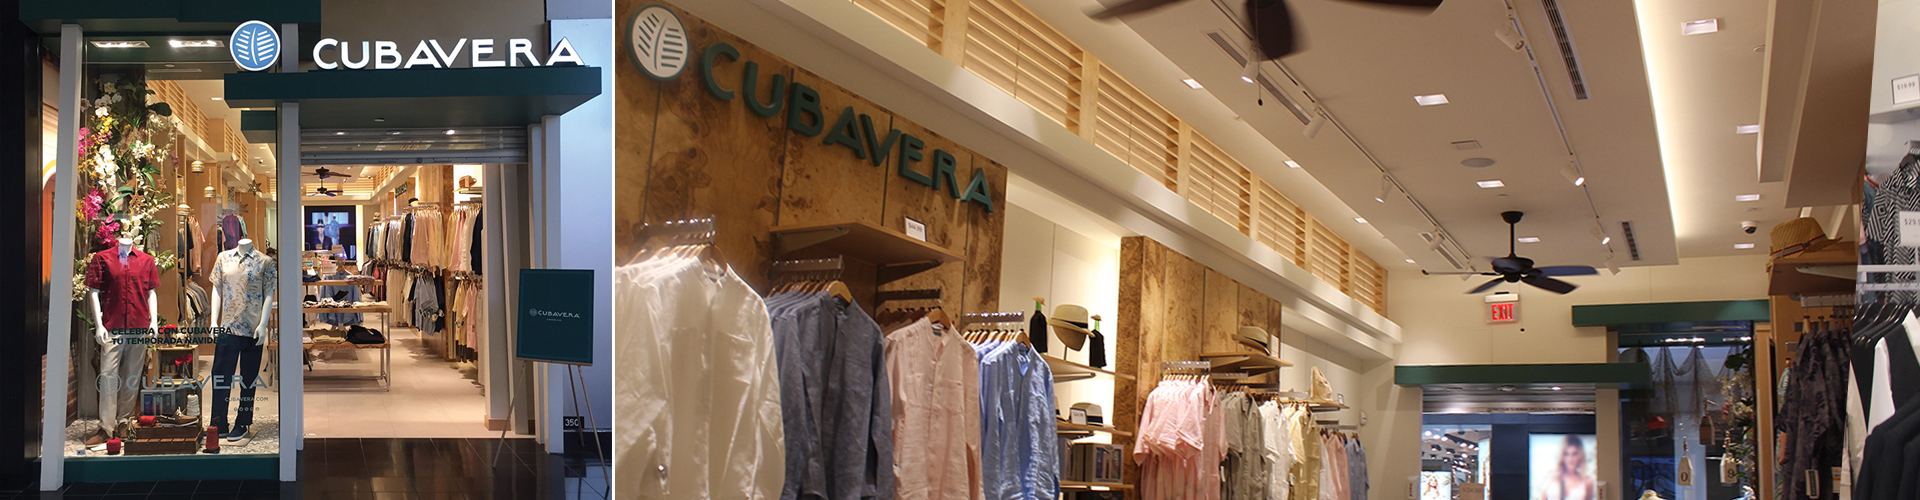 Cubavera Retail Store